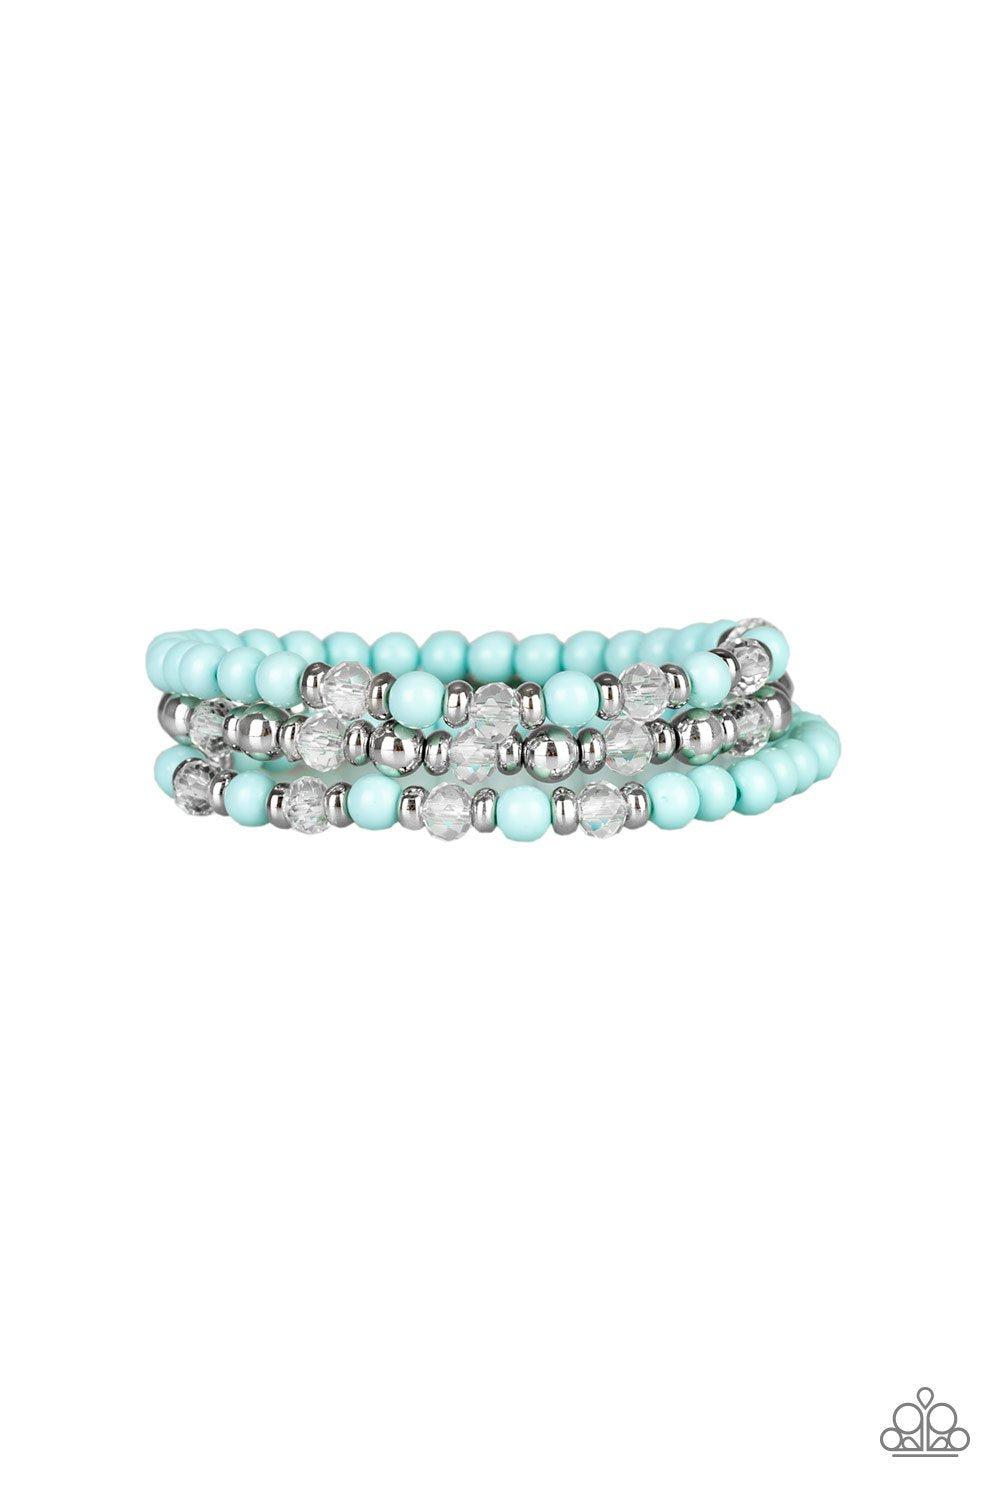 Irresistibly Irresistible Blue Bracelet Set - Paparazzi Accessories-CarasShop.com - $5 Jewelry by Cara Jewels